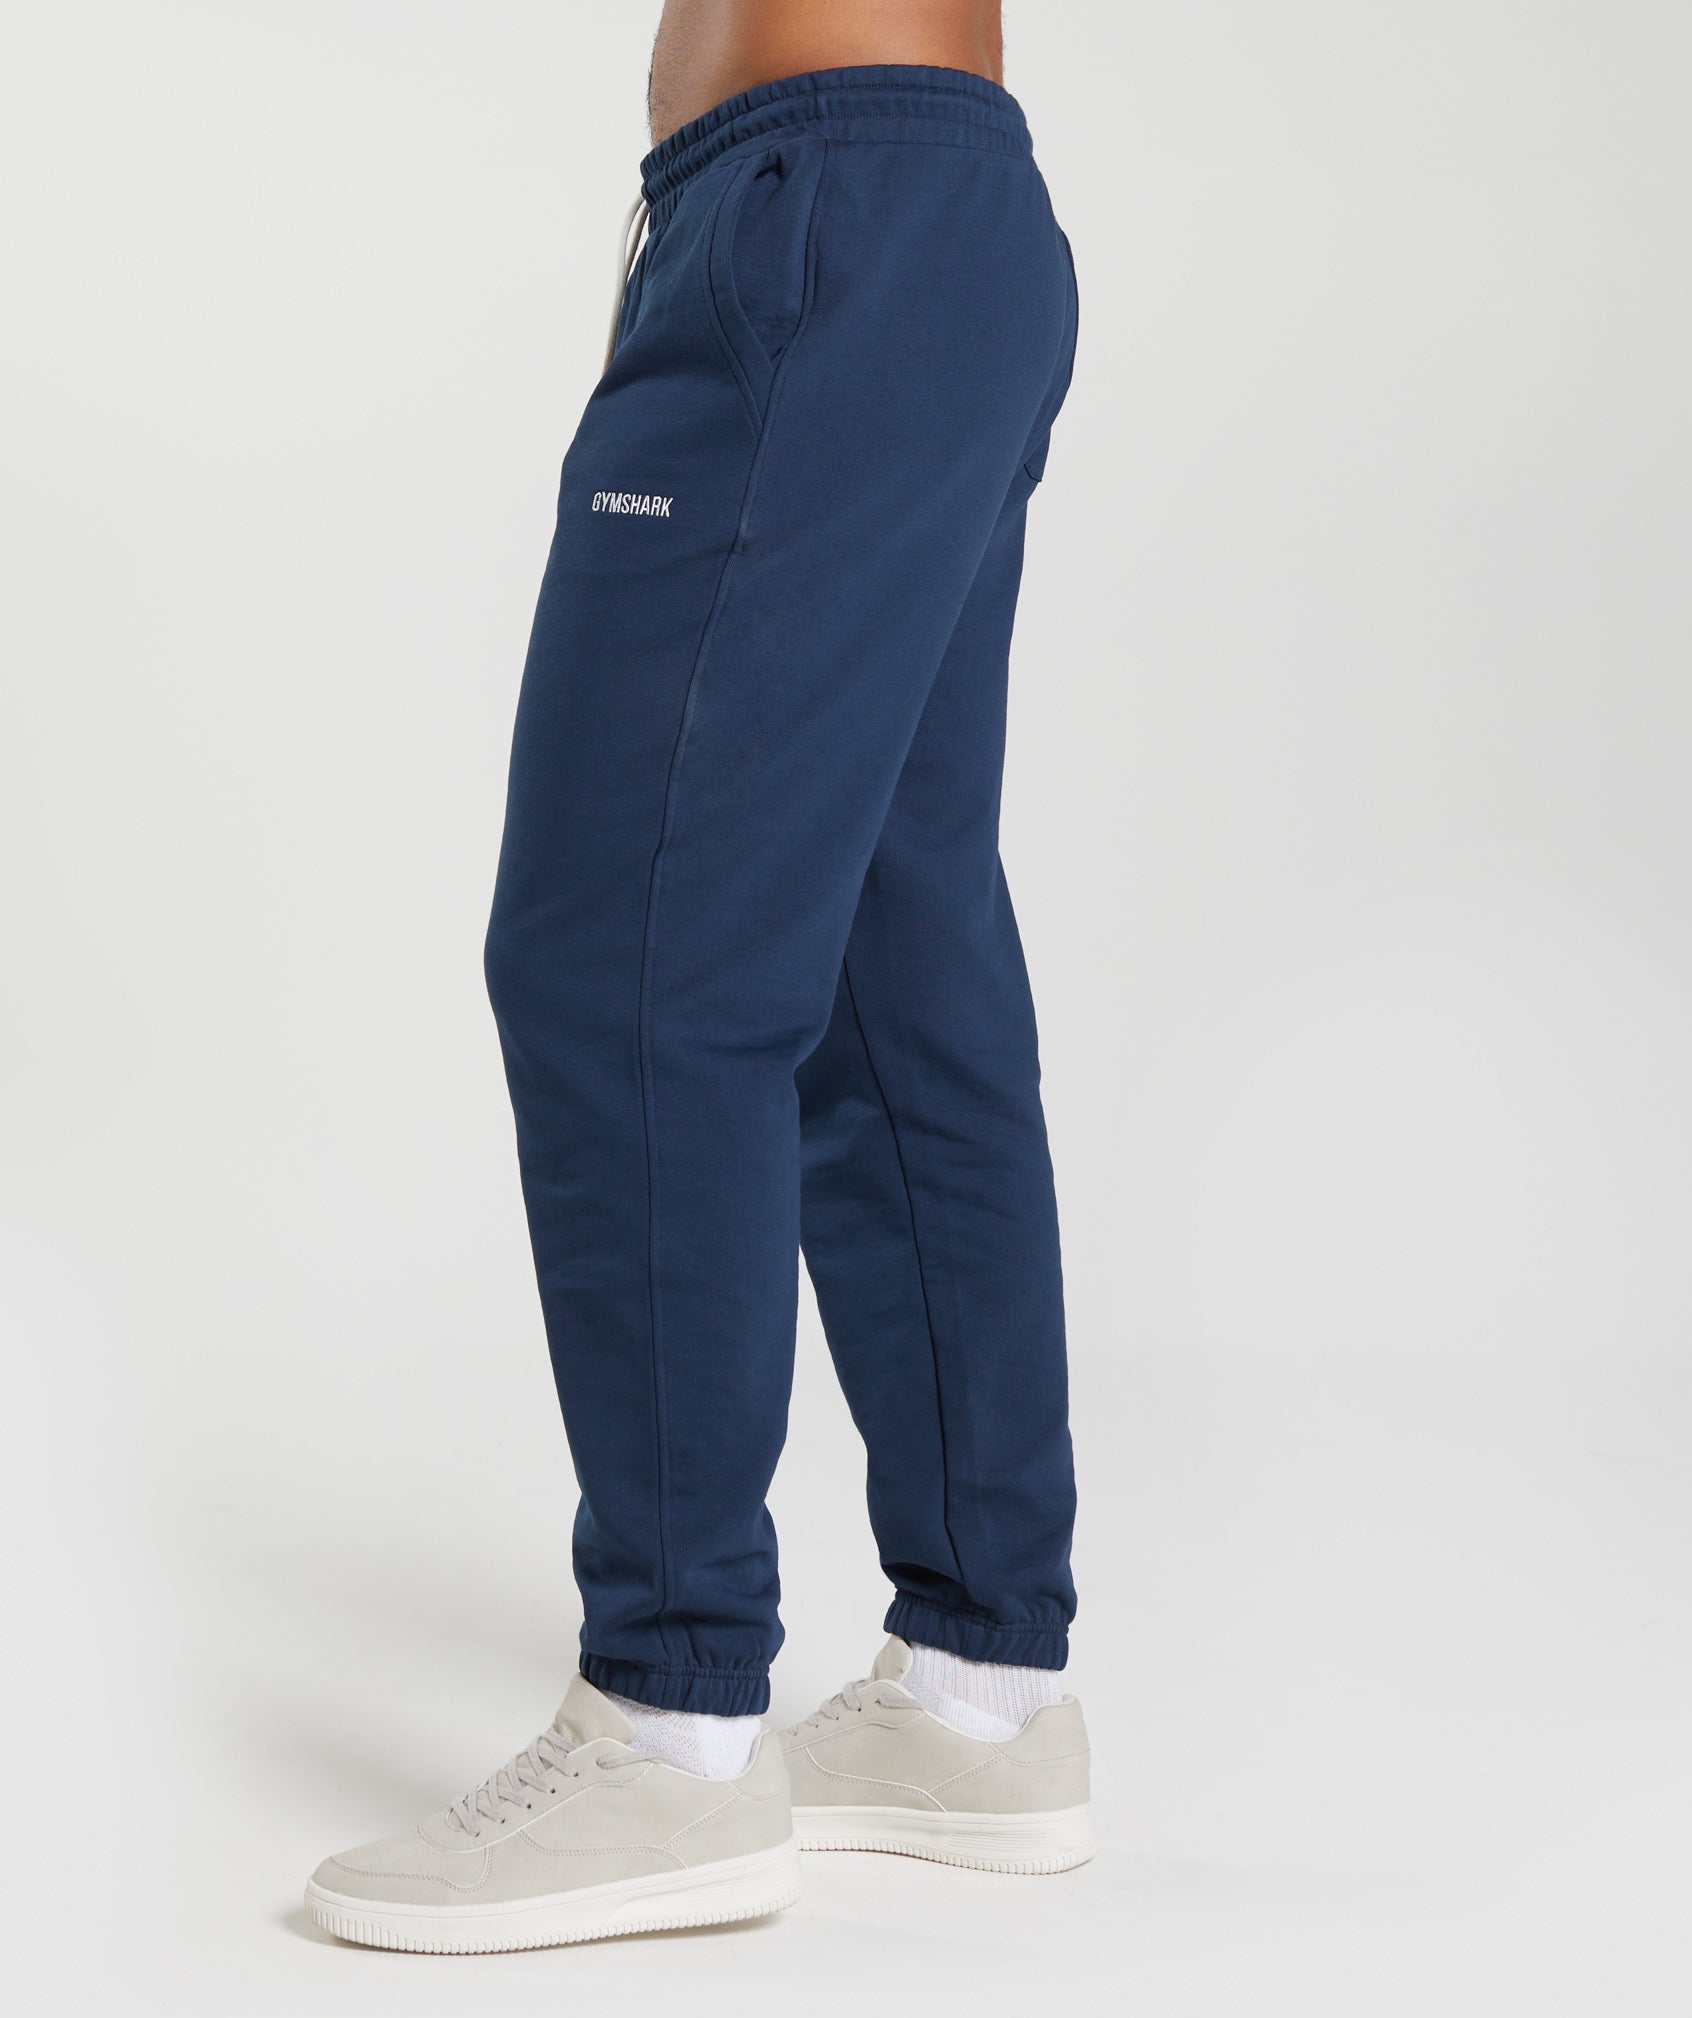 Gymshark Size Medium Sweatpants Gray Pockets Embroidered Logo